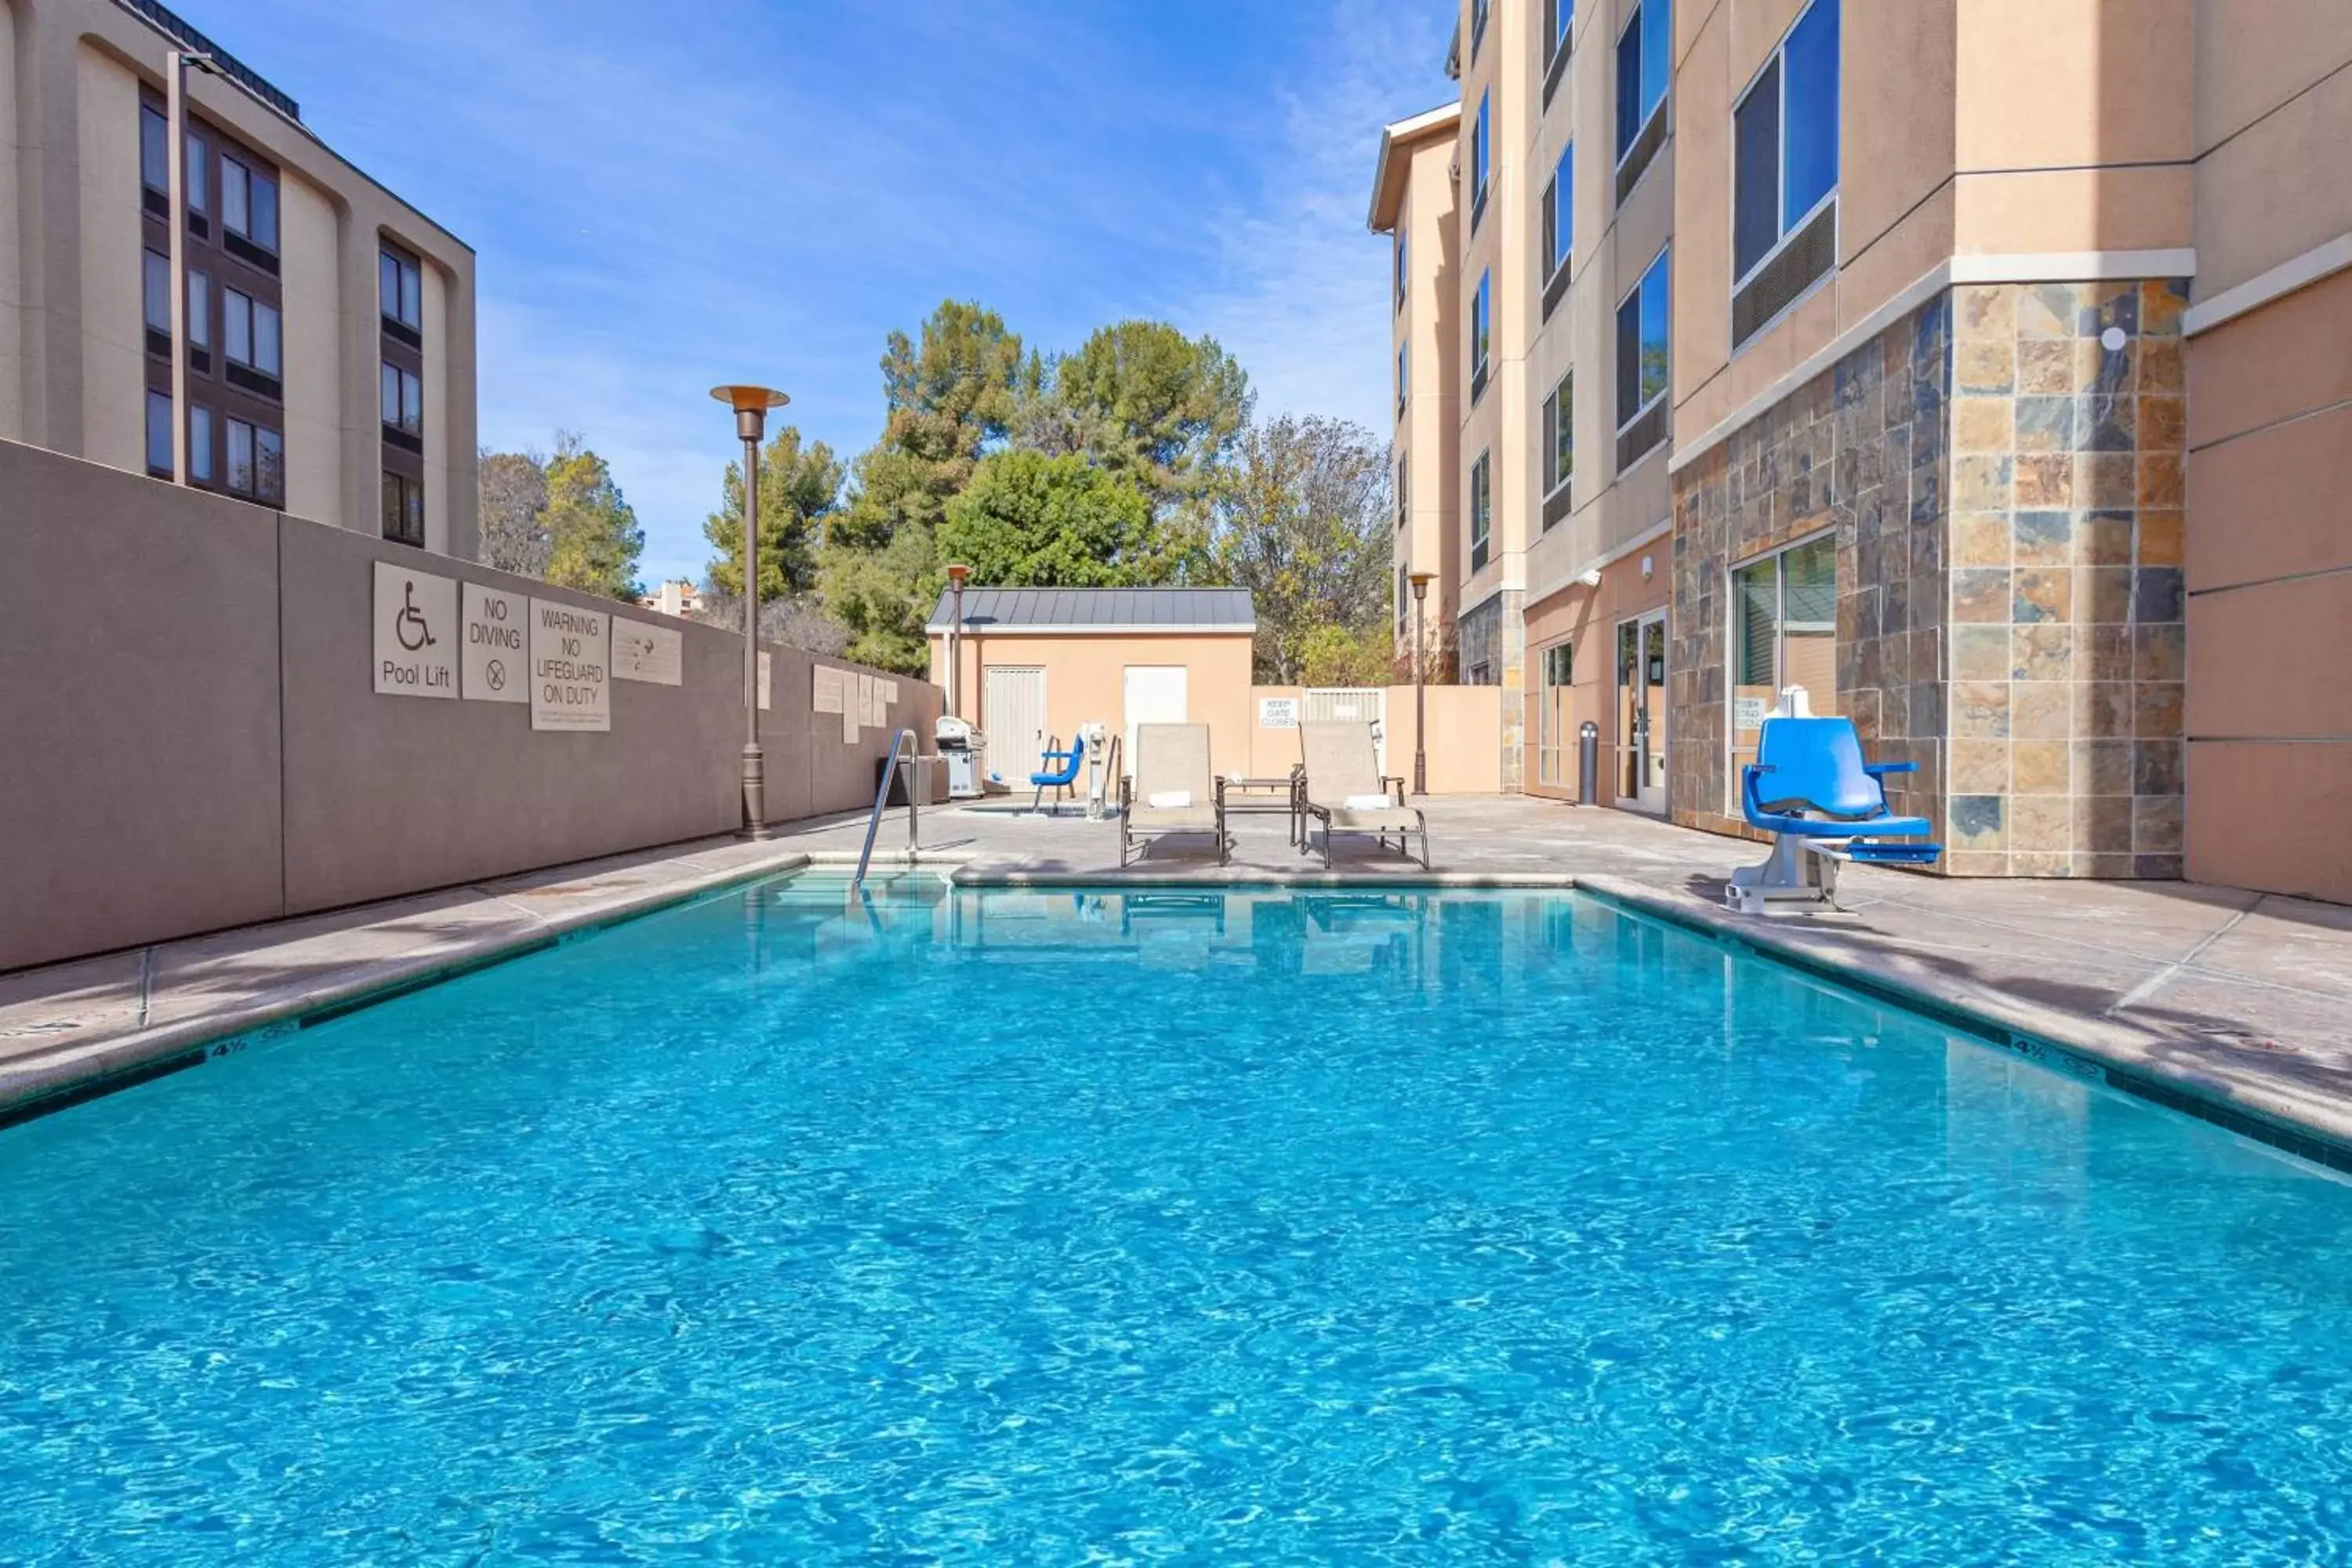 Swimming Pool in Fairfield Inn & Suites - Los Angeles West Covina